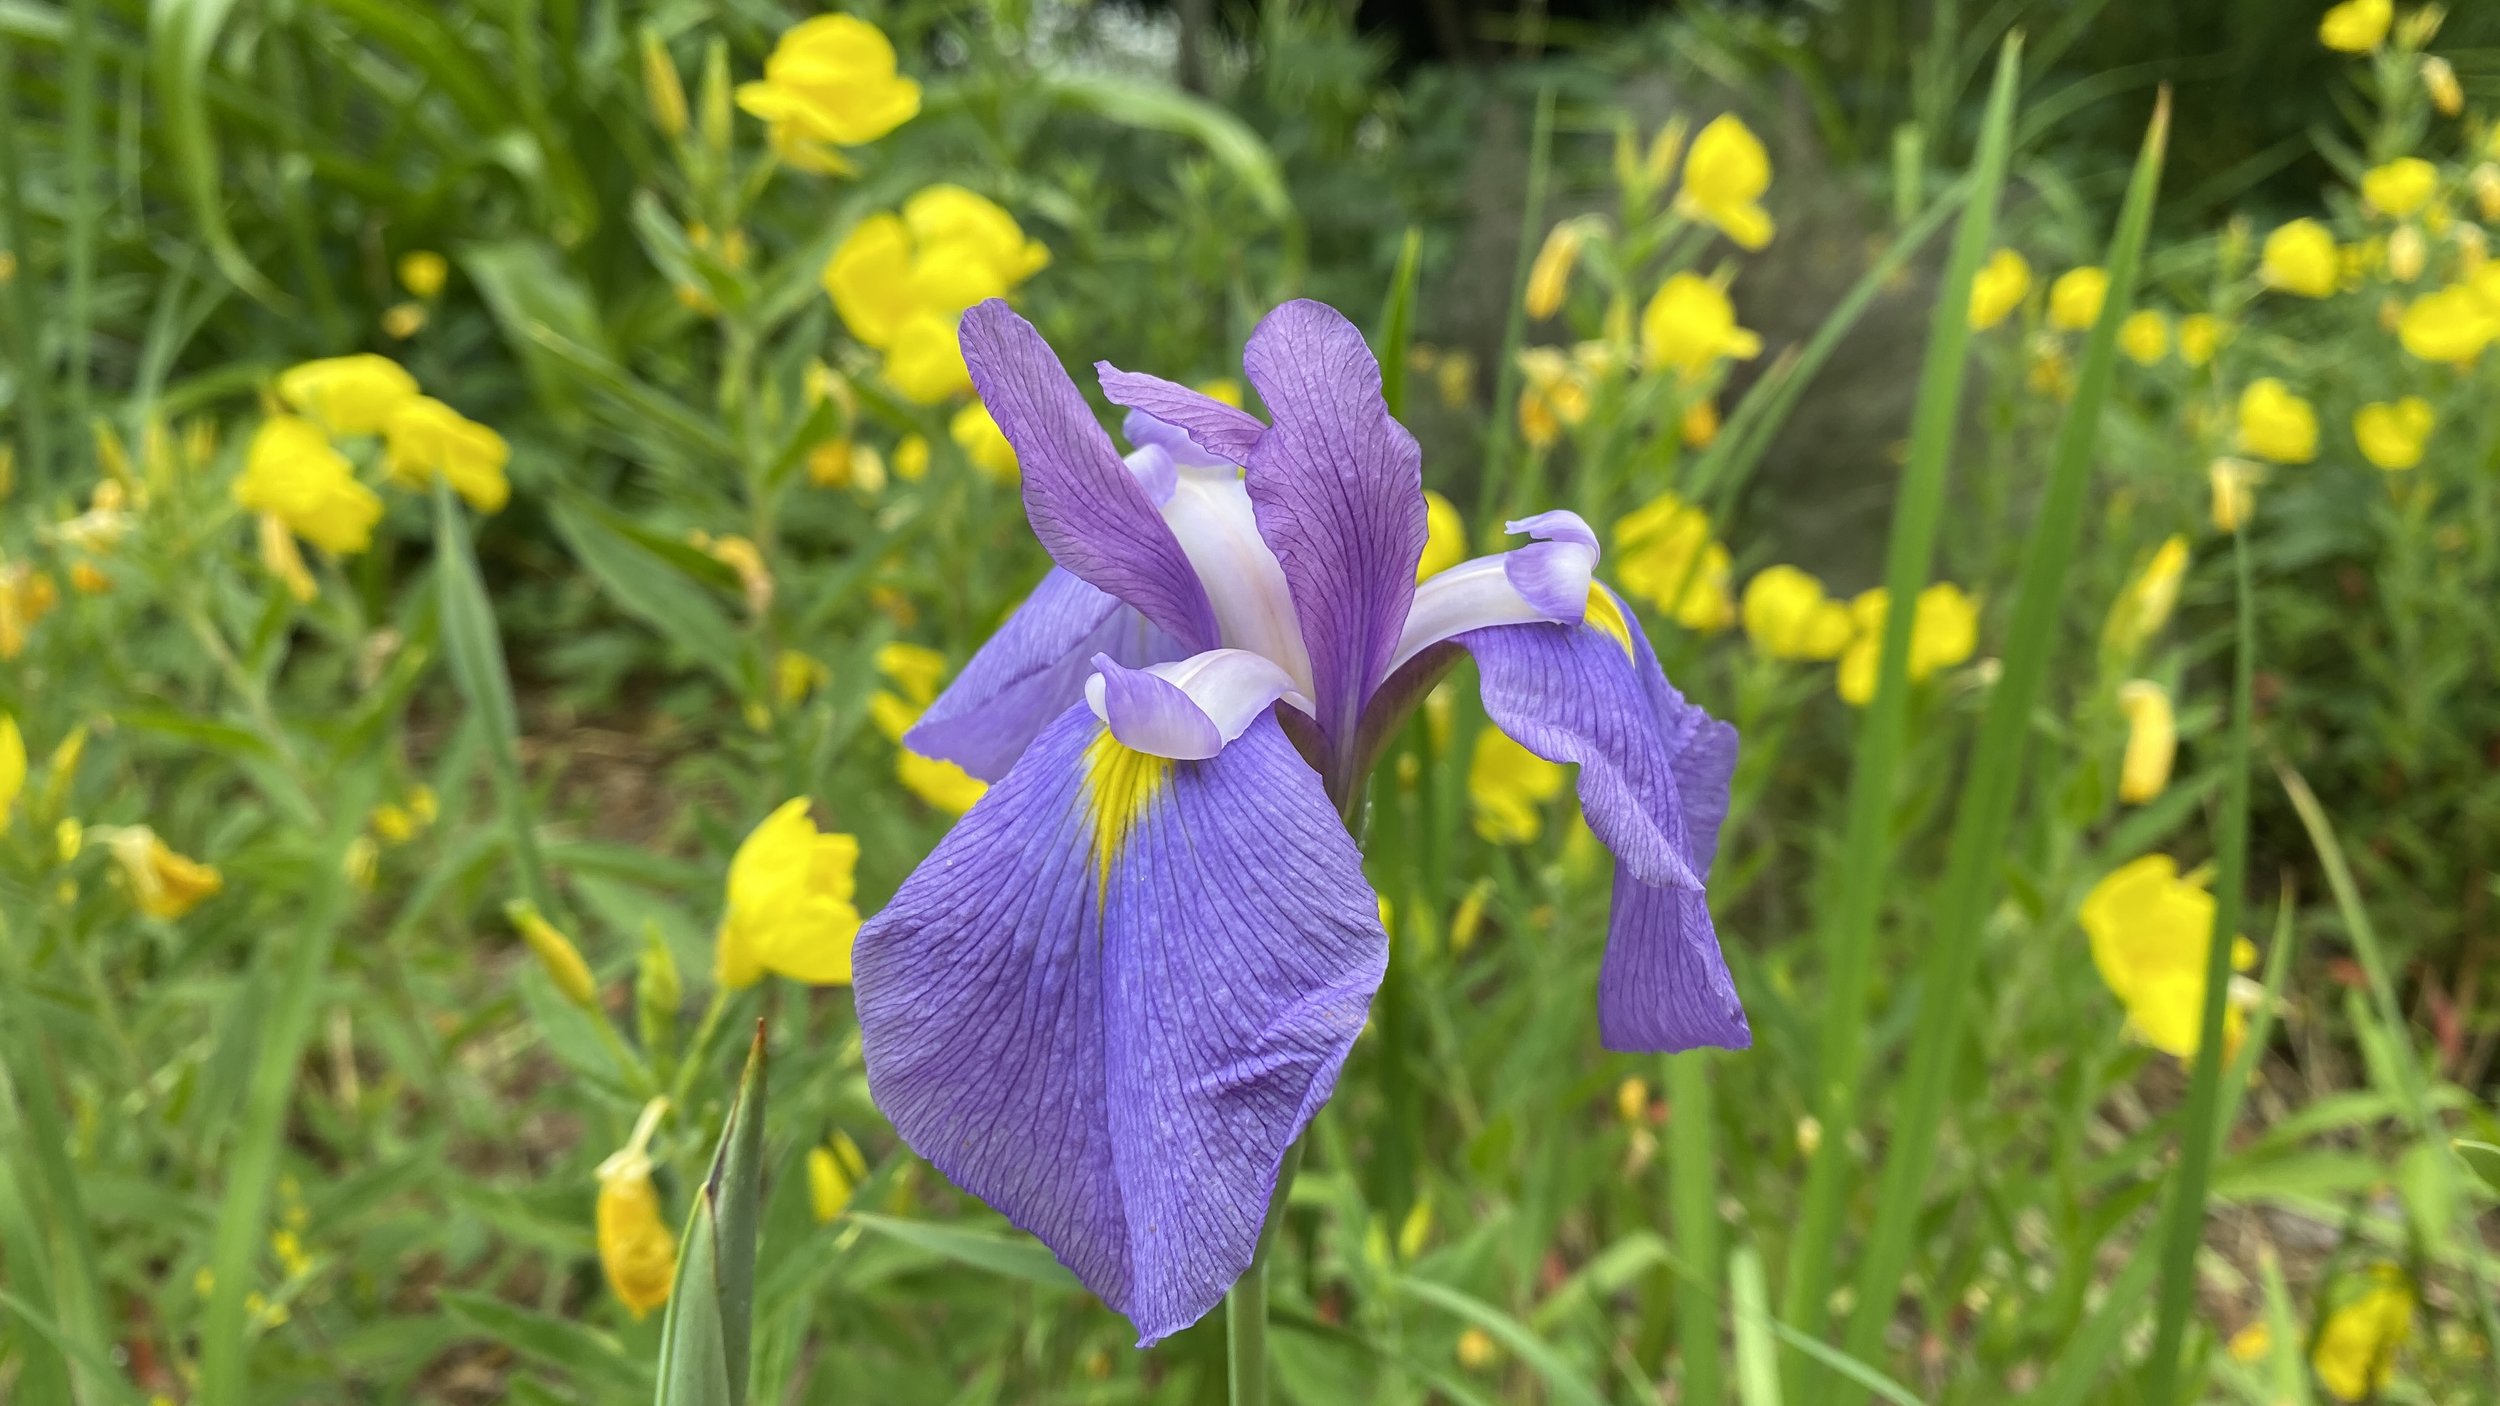 Japanese iris